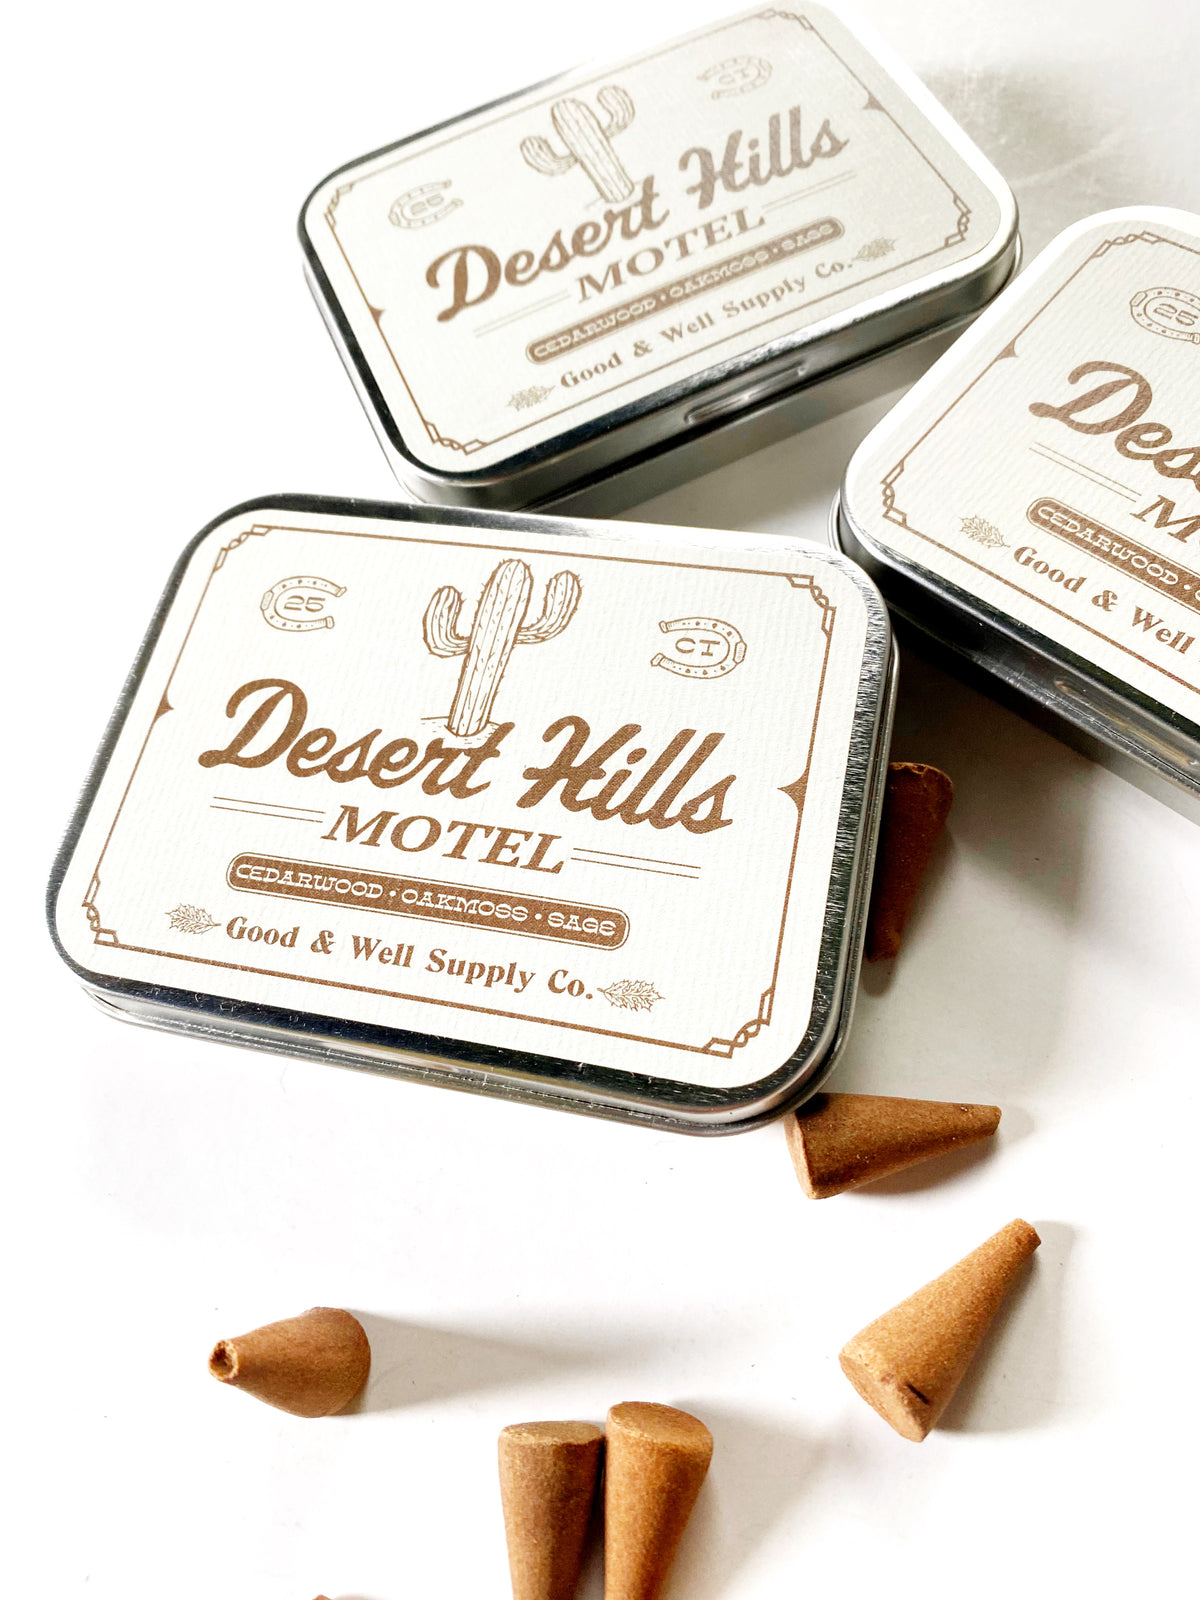 Good &amp; Well Supply Co: Desert Hills Motel Incense - cedarwood, oakmoss &amp; sage